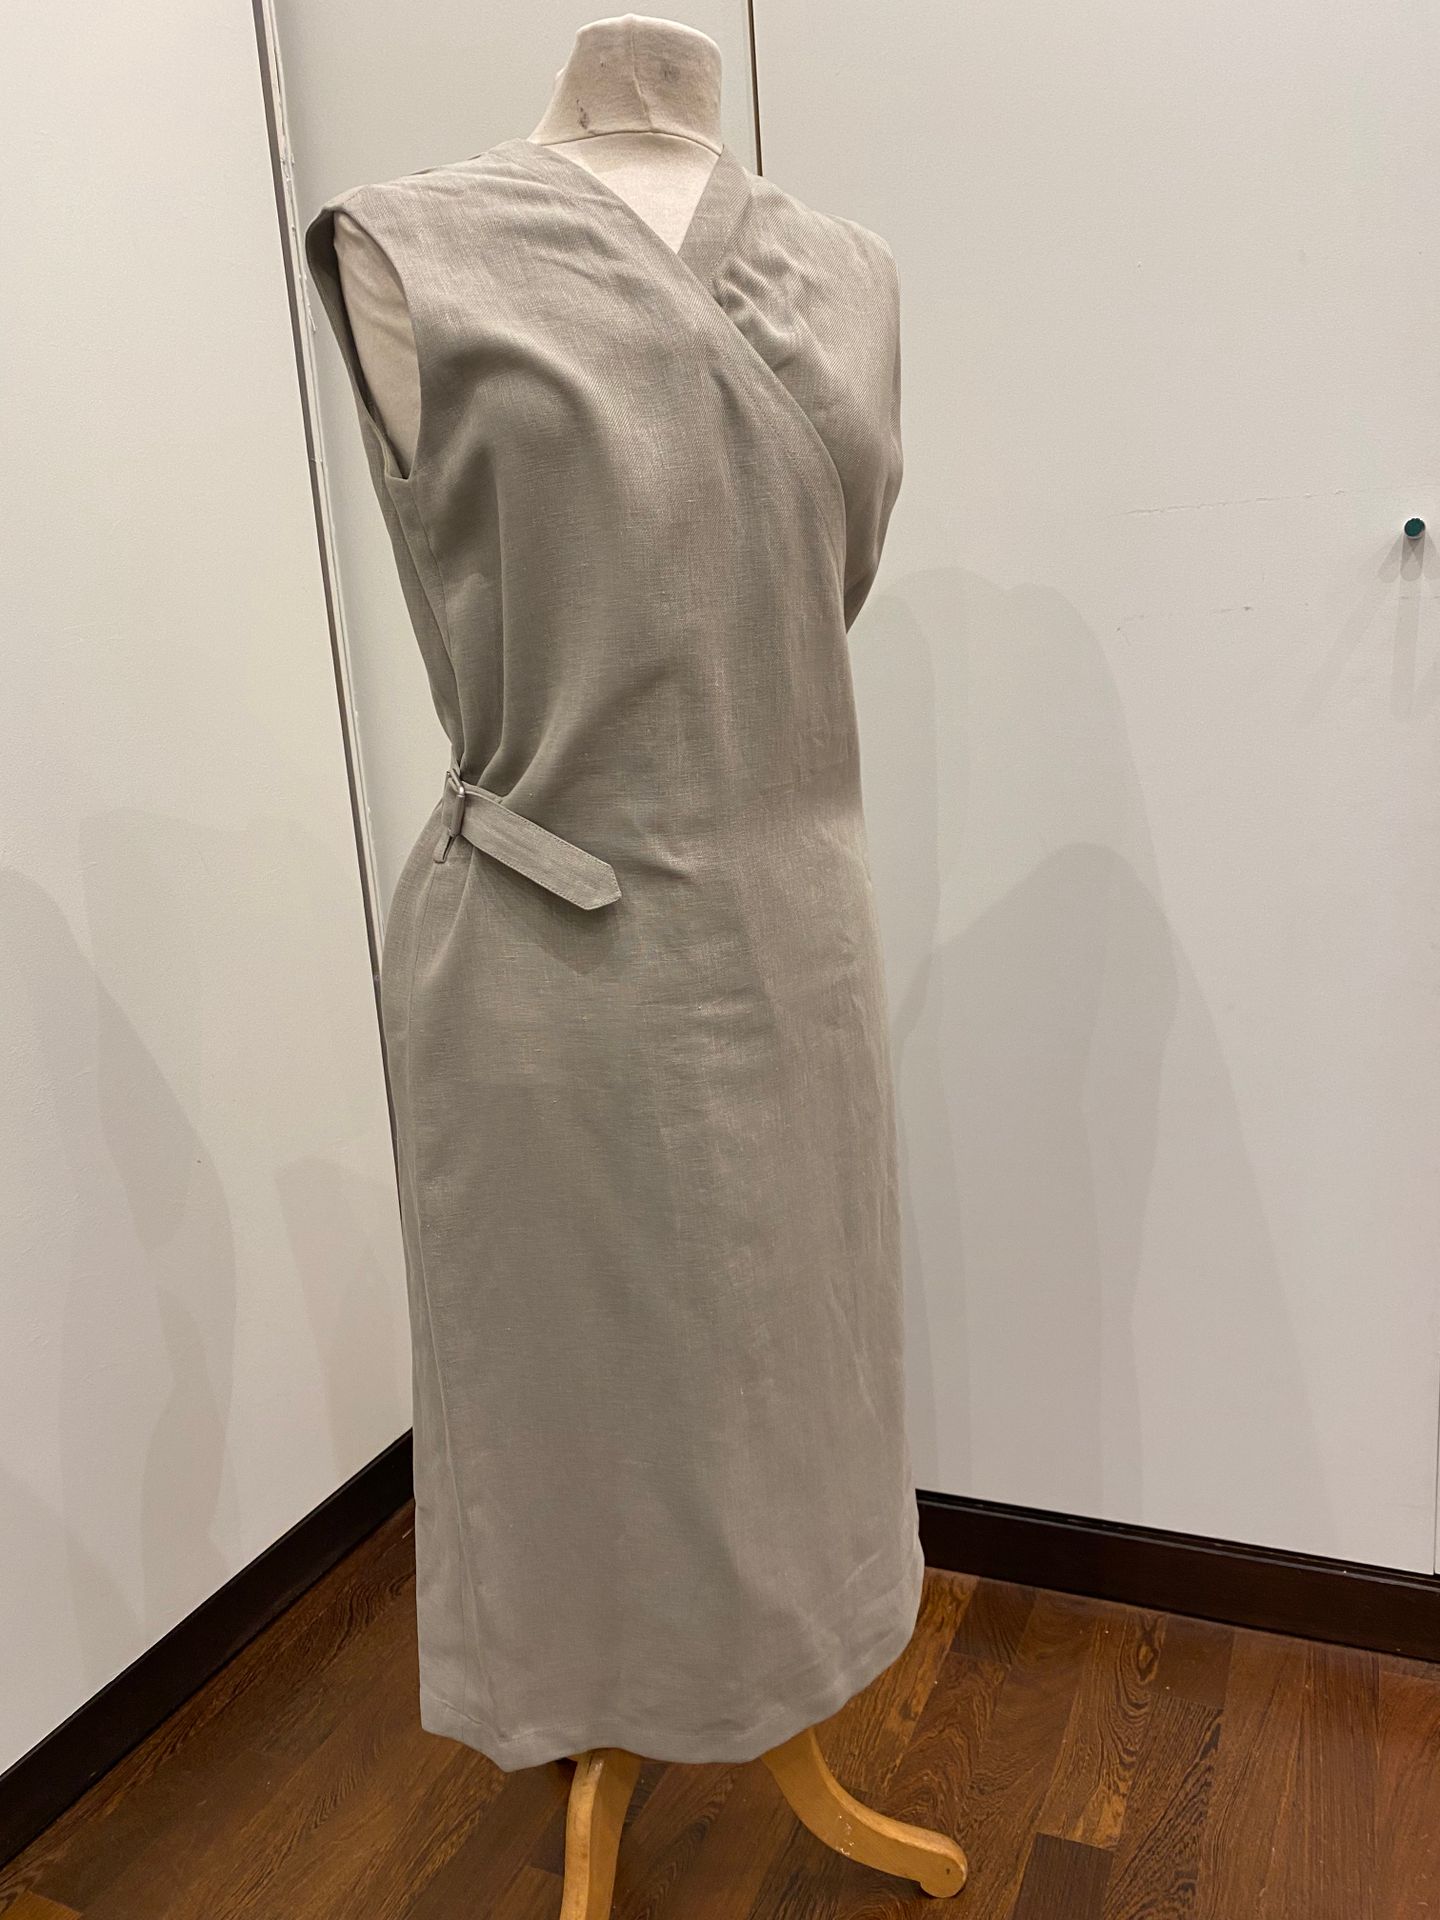 Null 赫尔墨斯。

无袖亚麻布连衣裙。

尺寸46